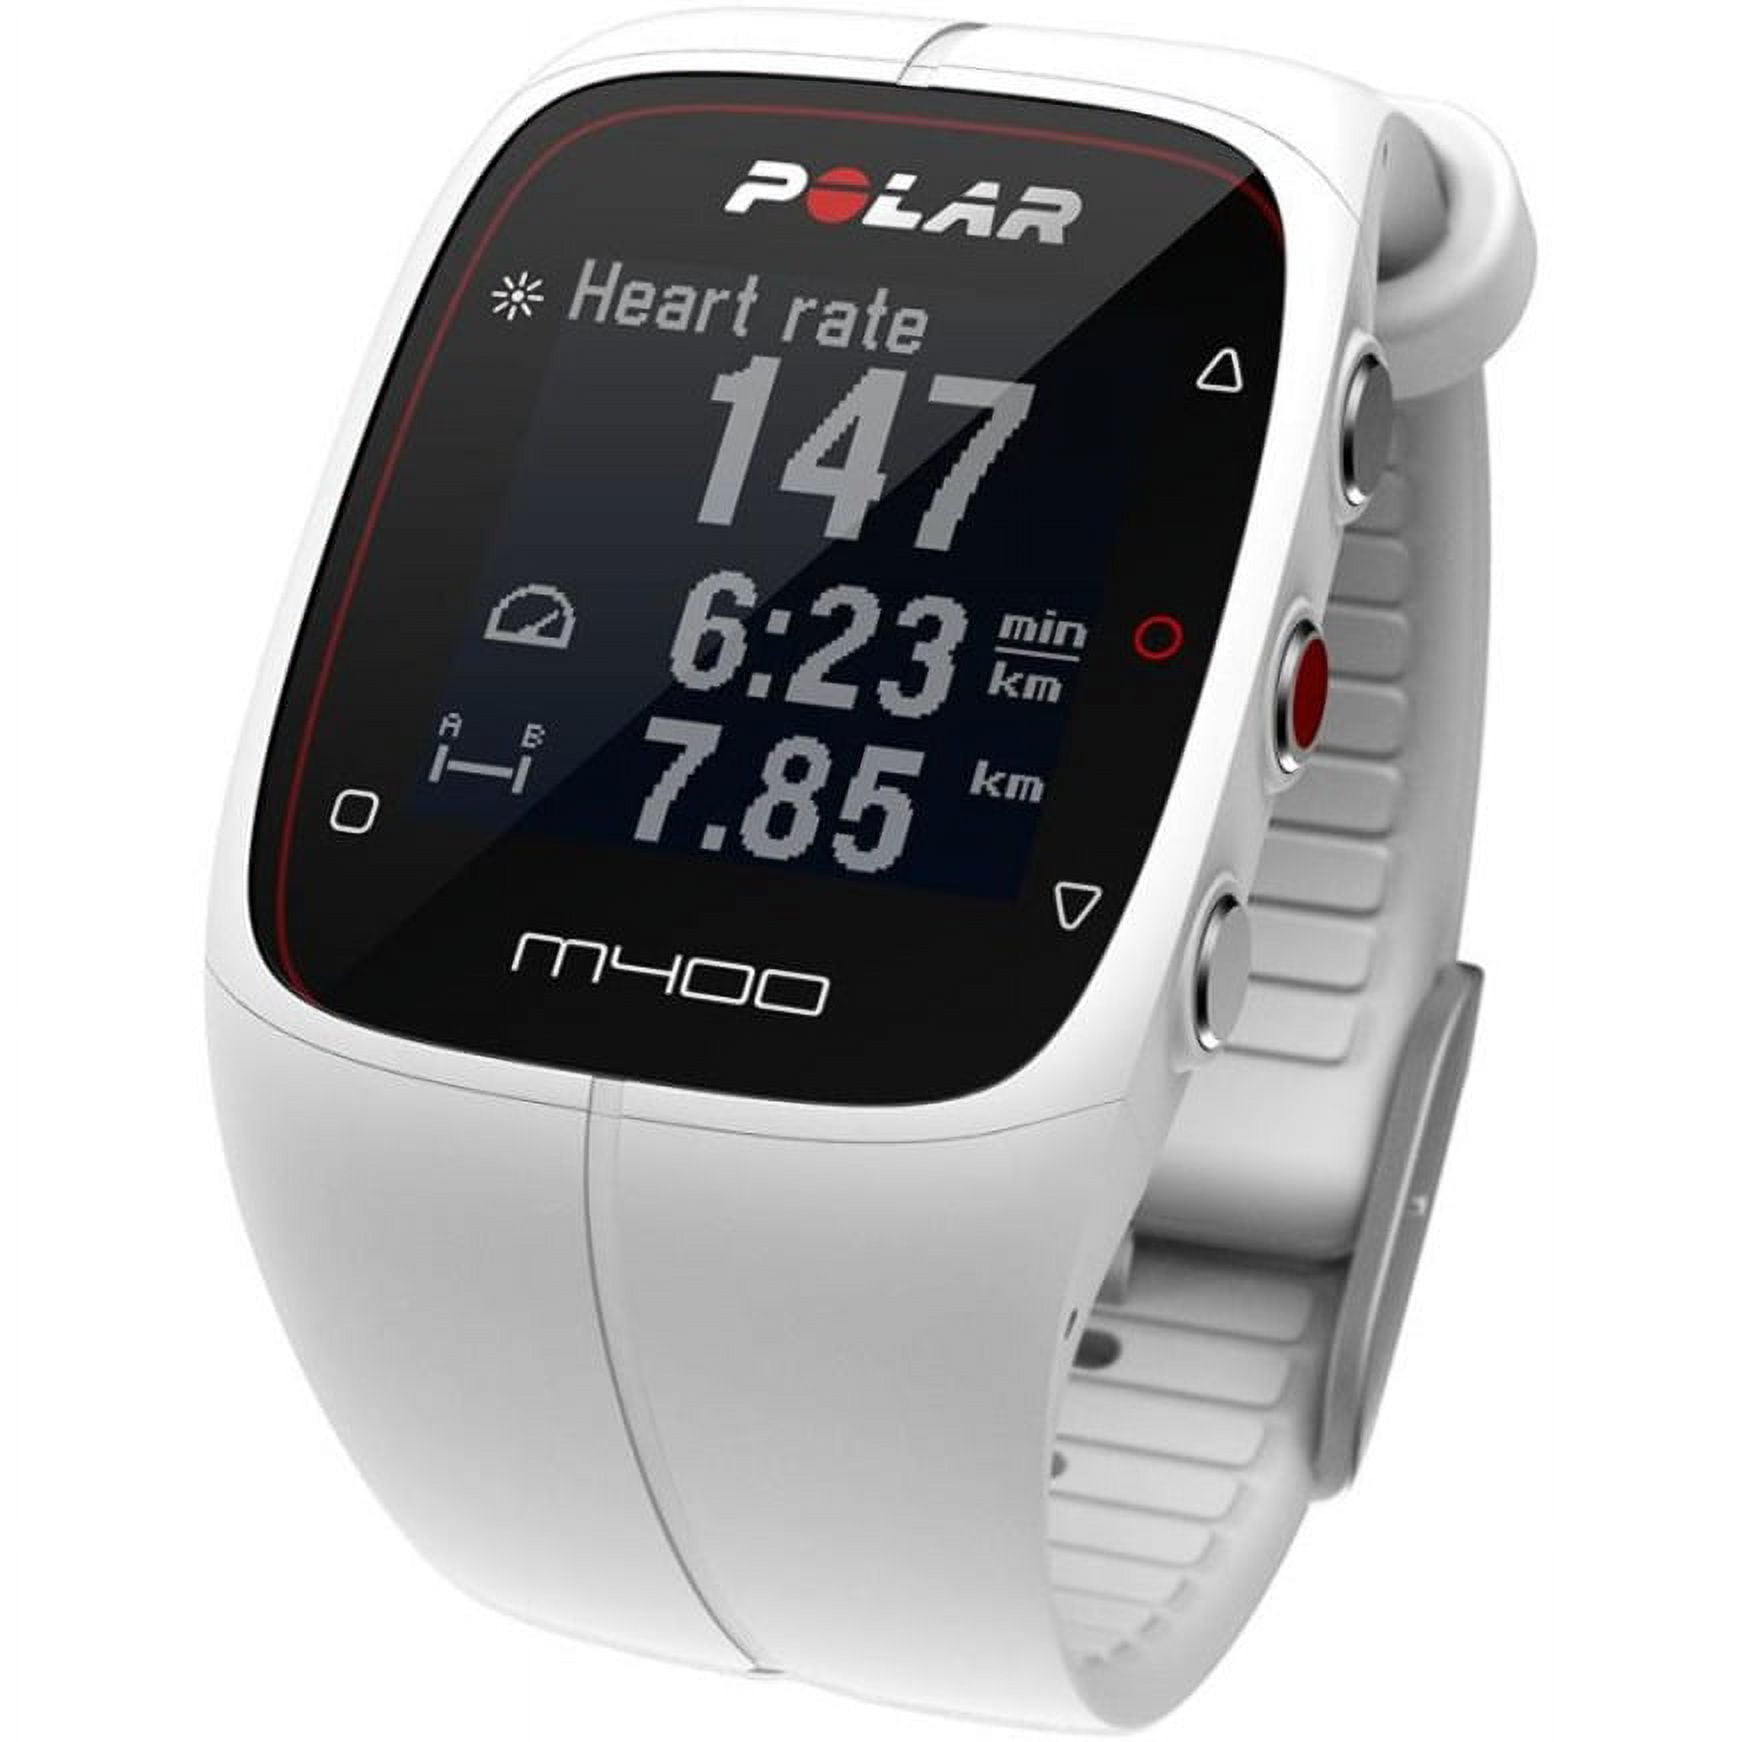 Oferta! Polar M400 HR - Reloj con GPS integrado y registro de